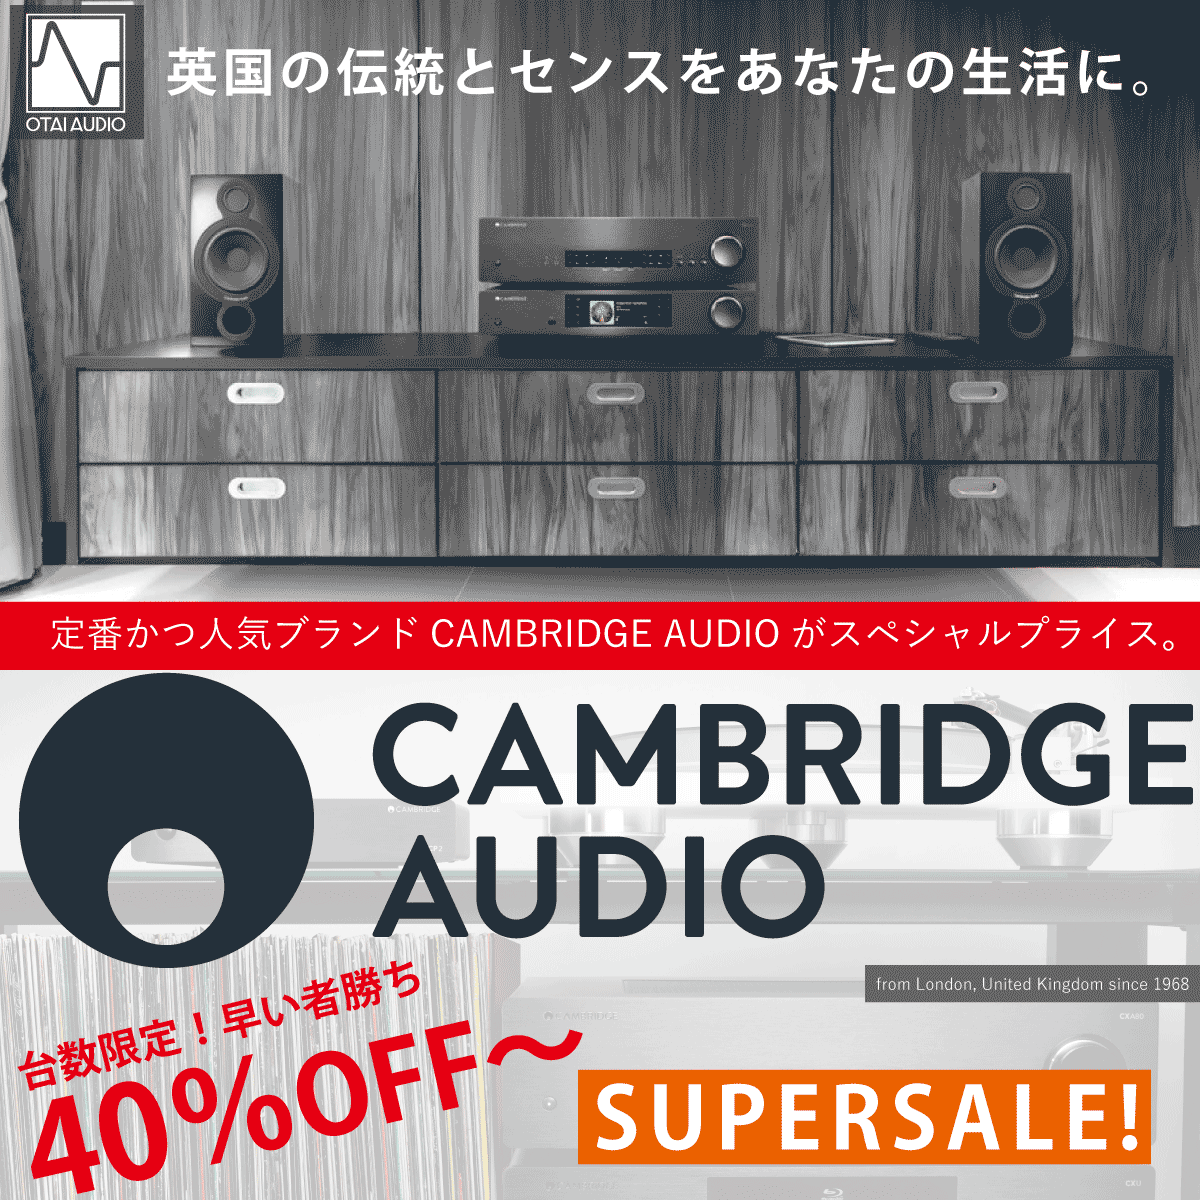 Cambridge Audio Sale